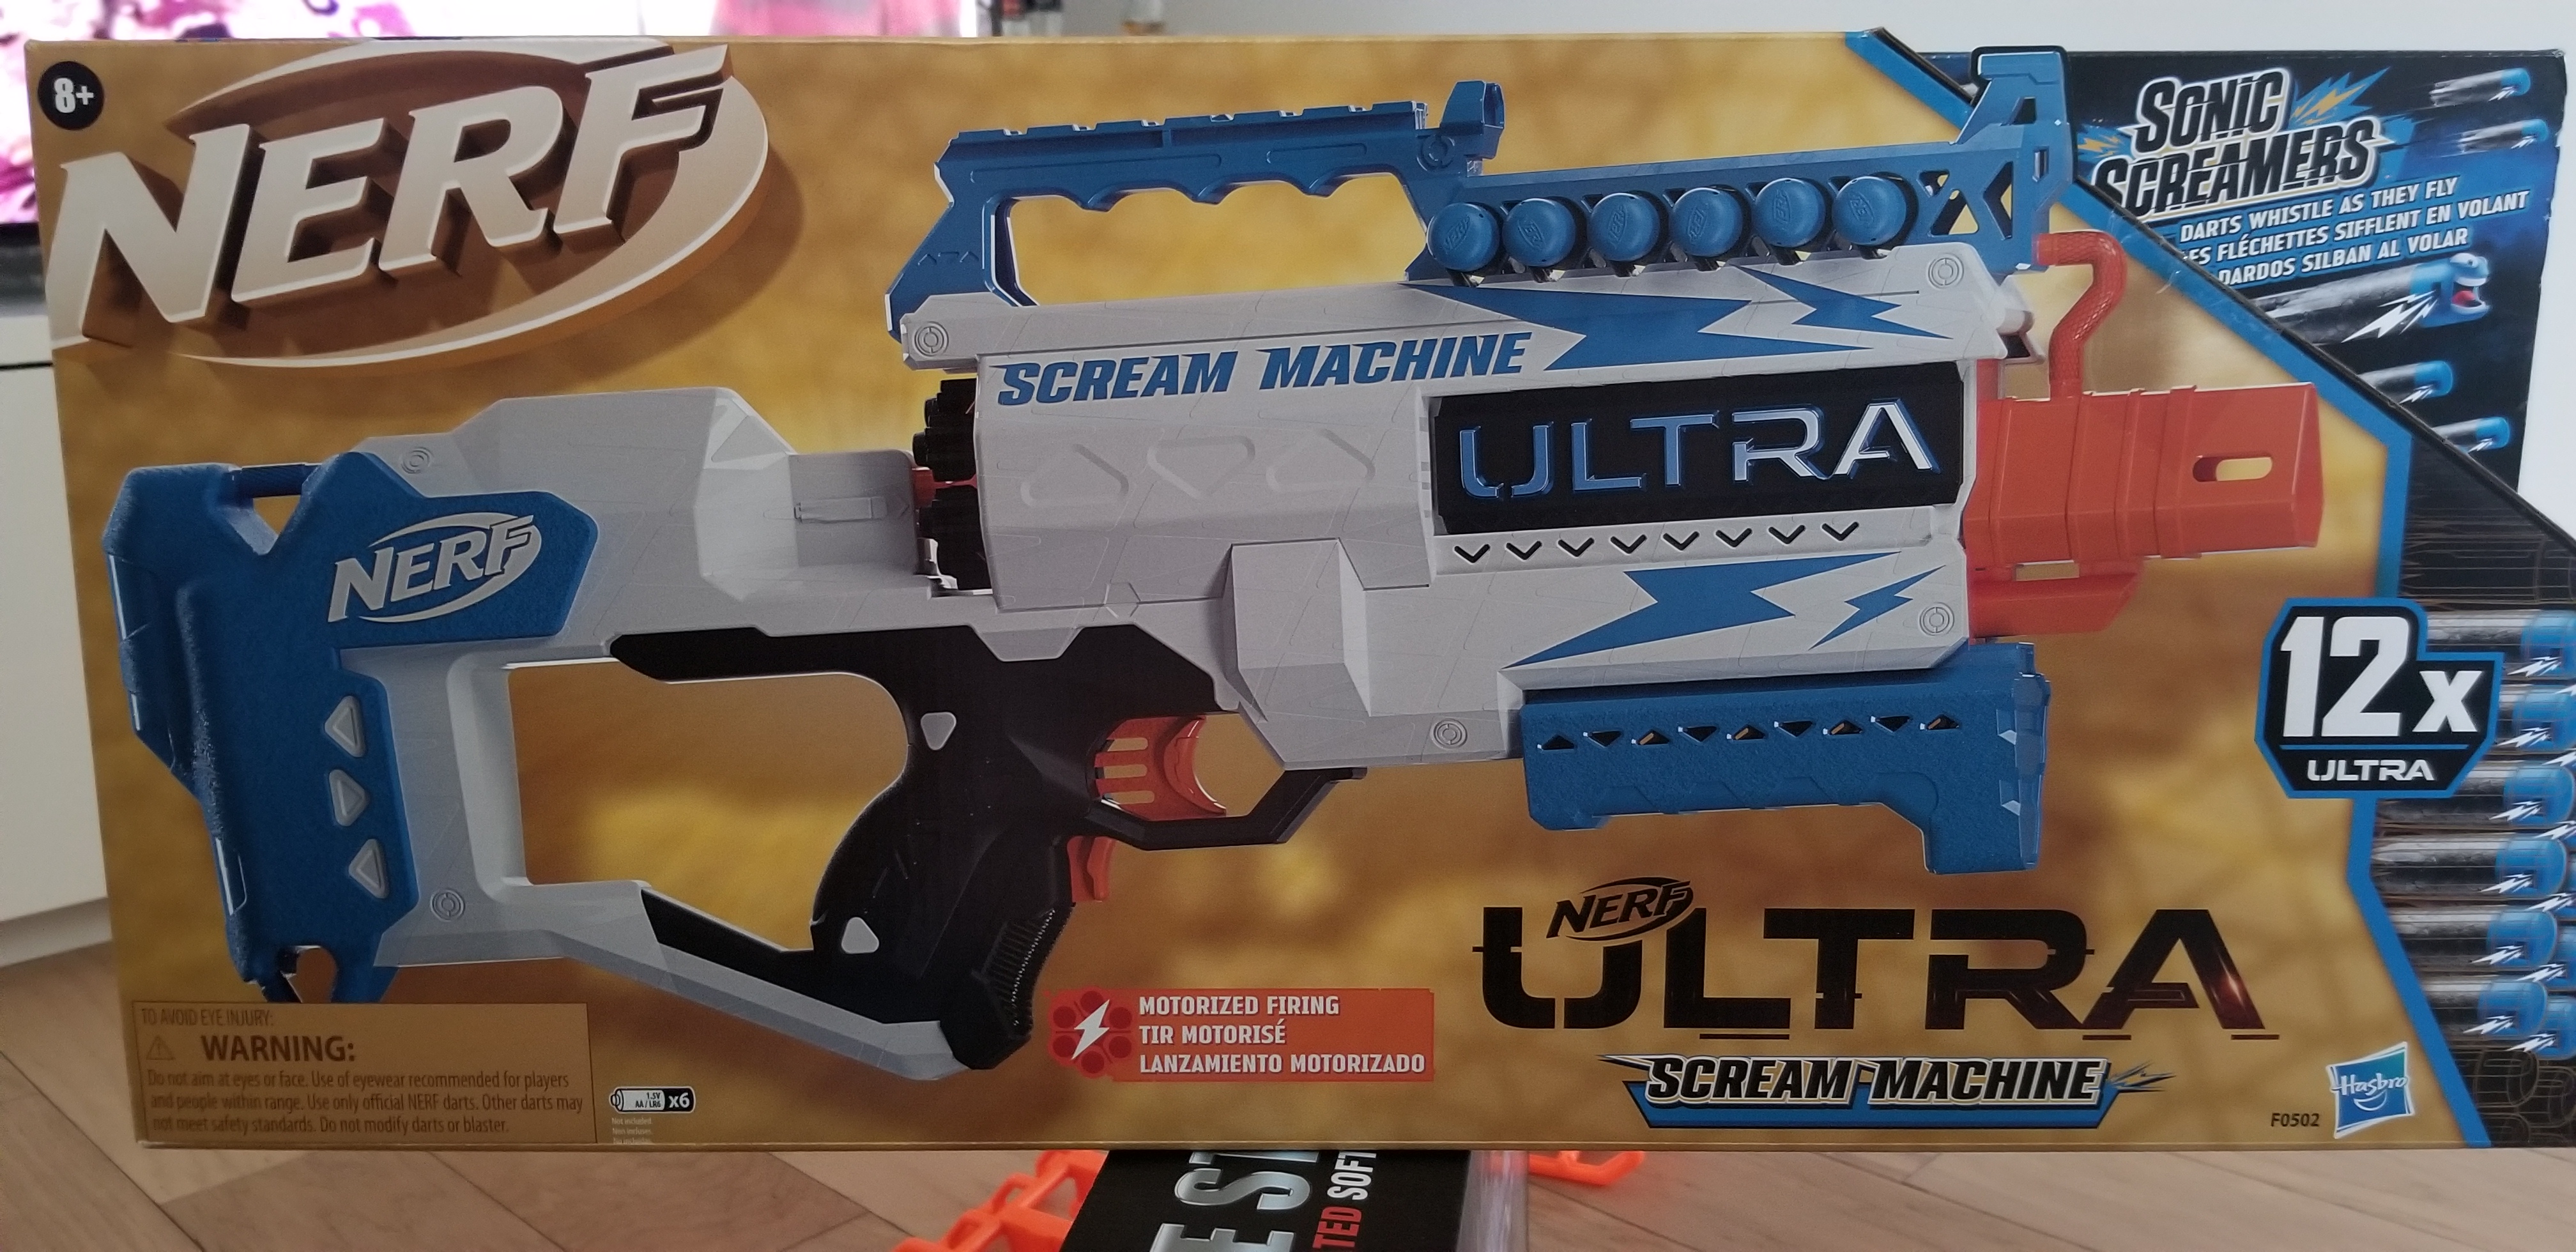 Nerf Ultra Scream Machine Review